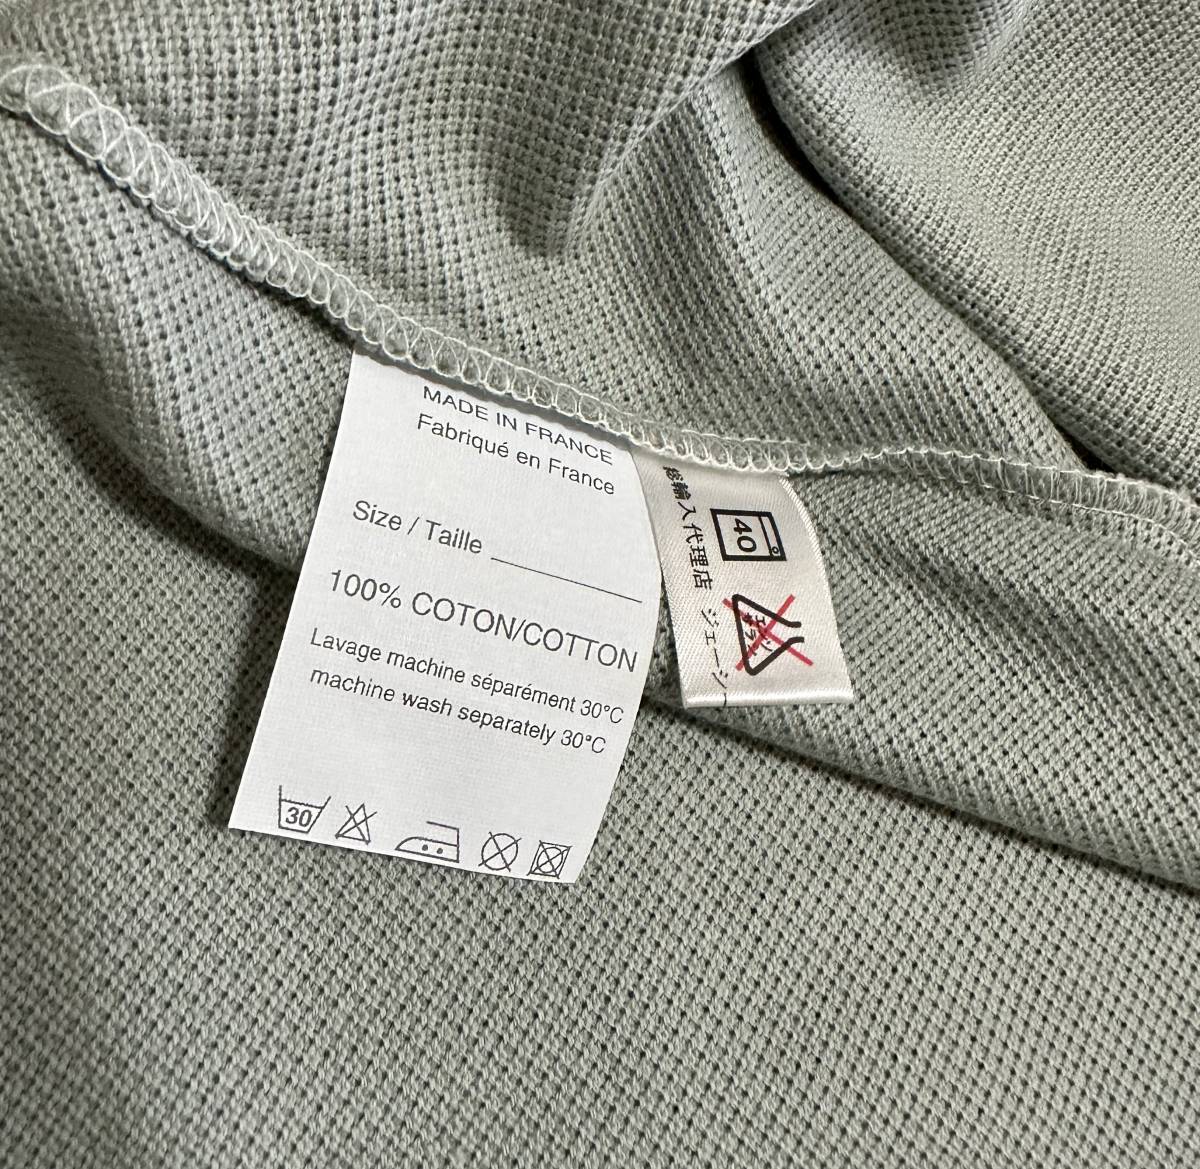 dead stock ！ タグ付 ！ vintage CELINE セリーヌ マカダム ポロシャツ made in france GRAY 22-45-003-41 N7009EMC